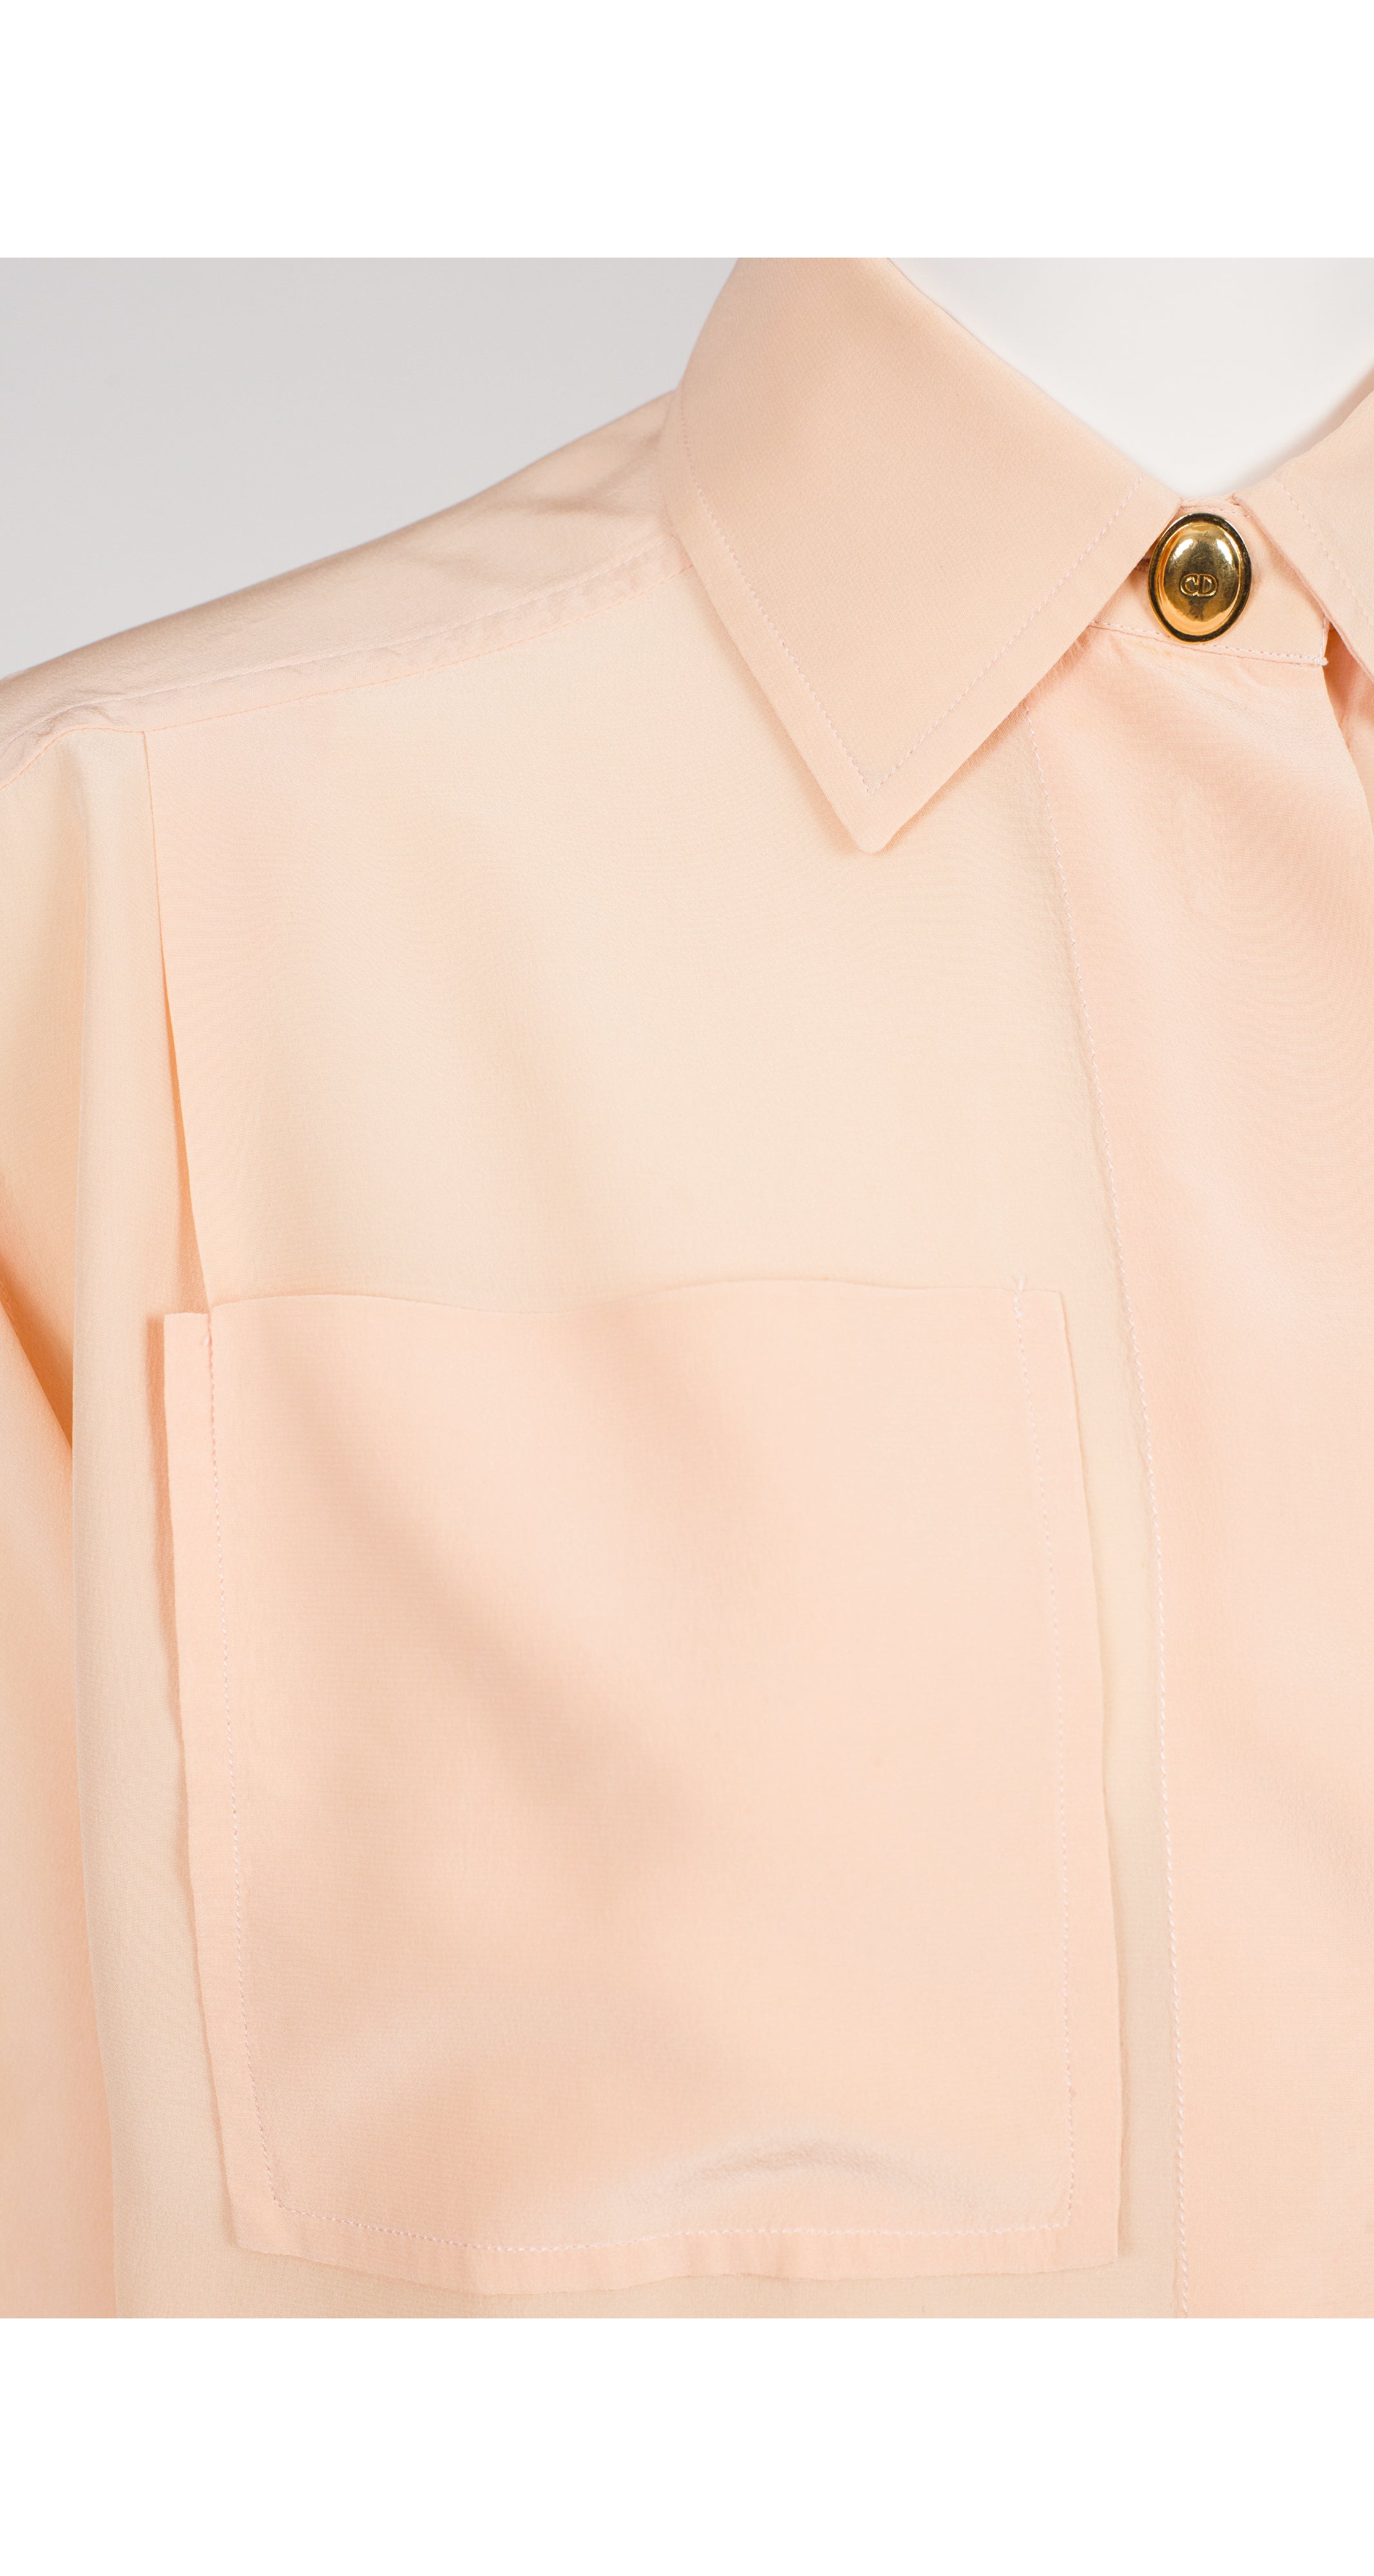 1980s Peach Silk Button-Up Collared Blouse